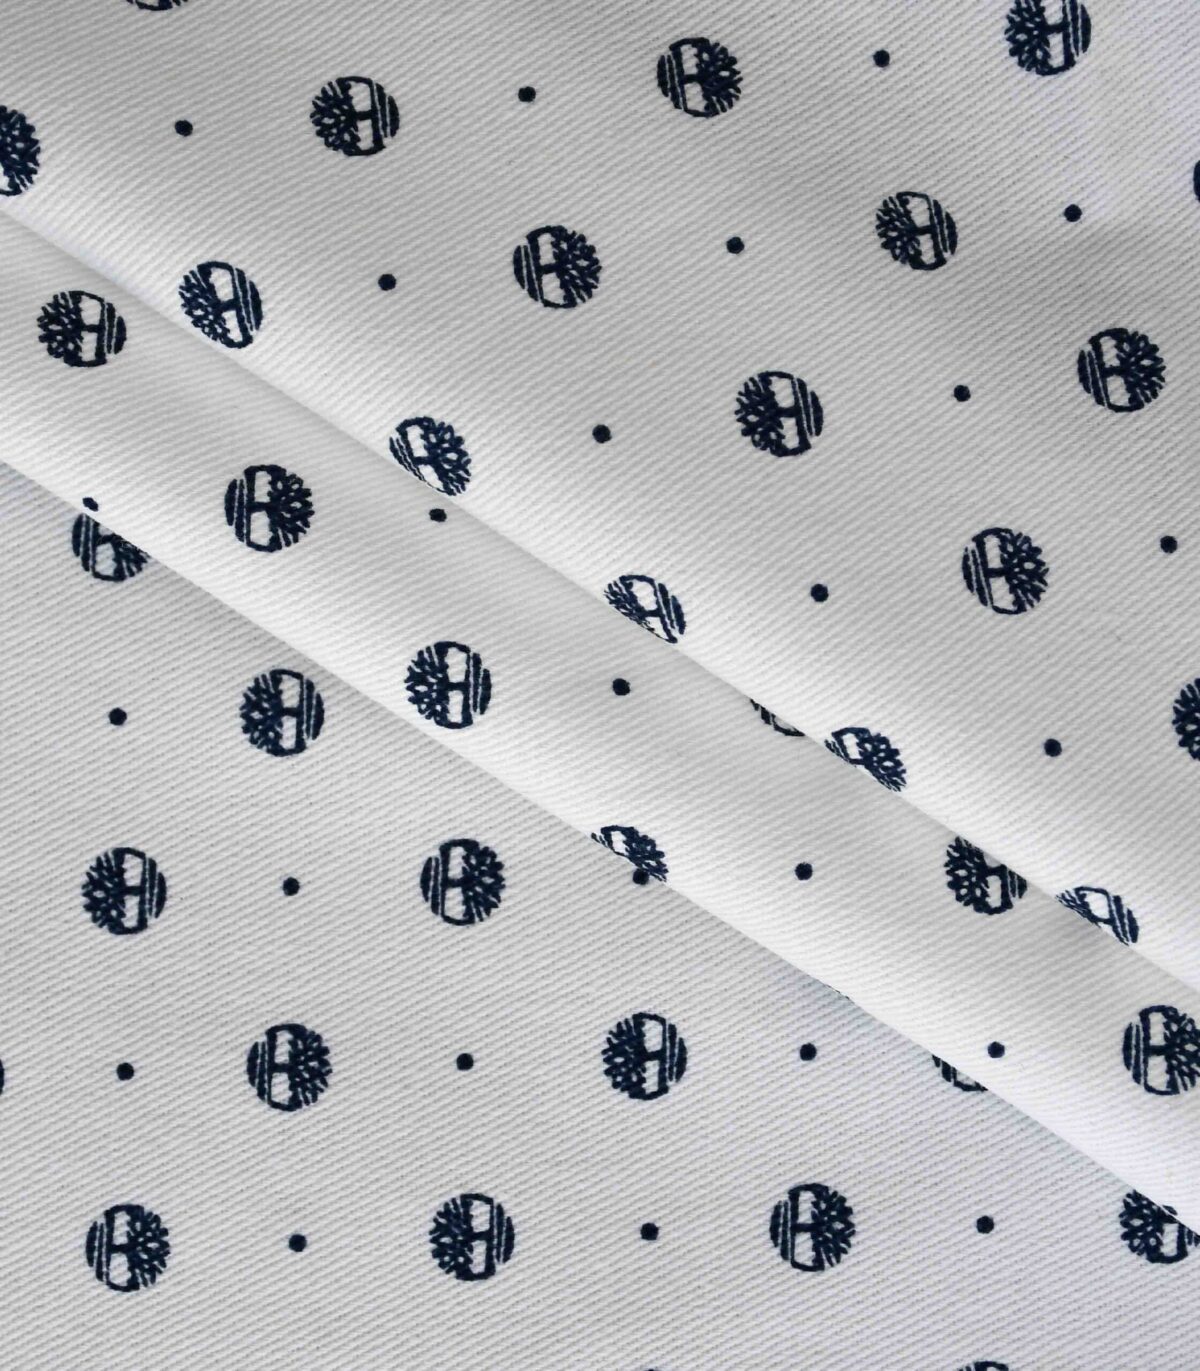 Cotton RFD Base Circular Print Fabric